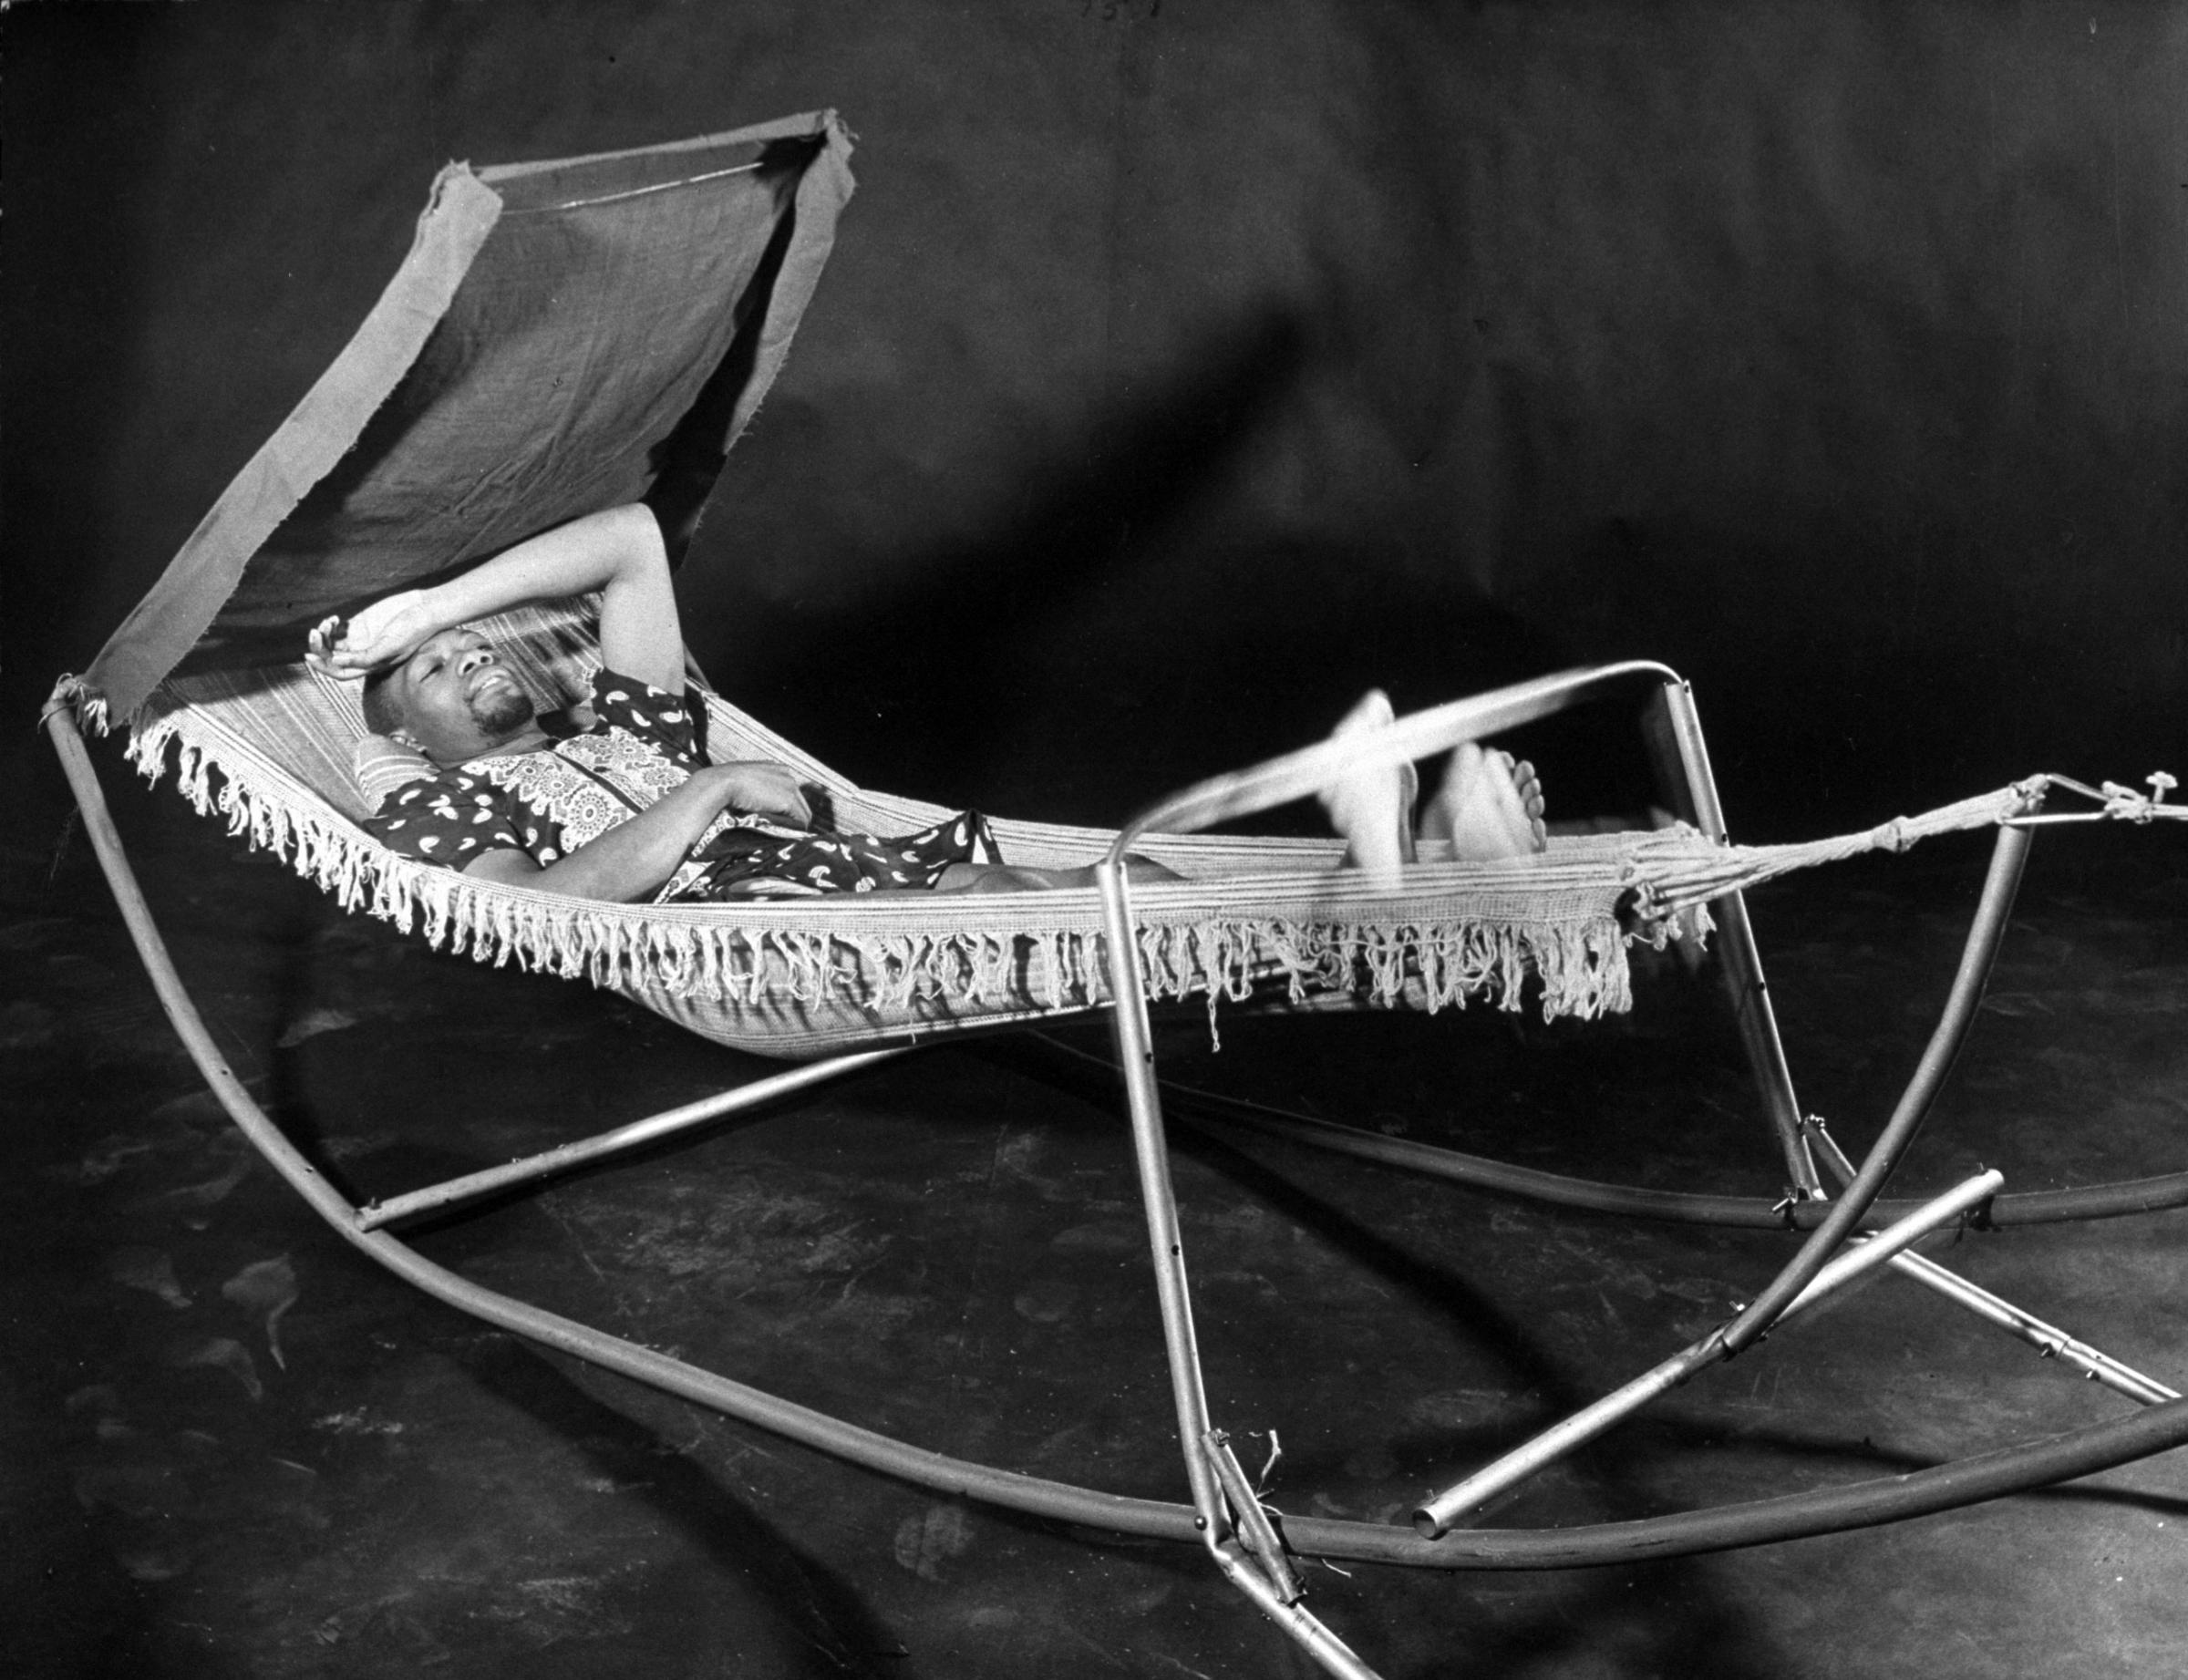 Gadget Invention Show, 1958